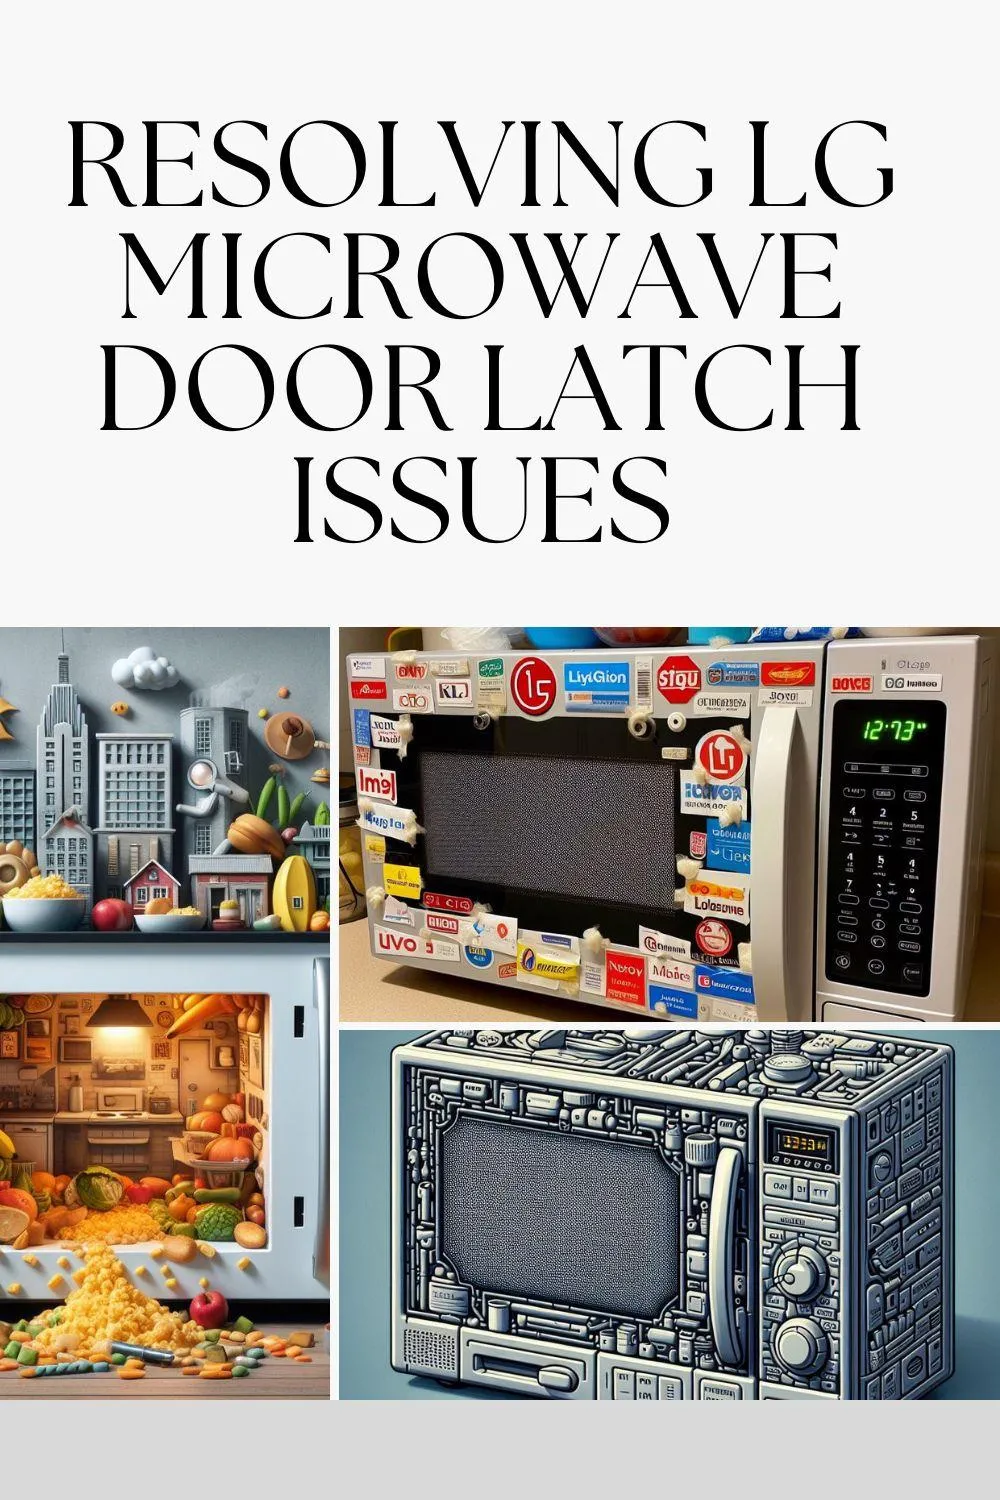 Resolving LG Microwave Door Latch Issues